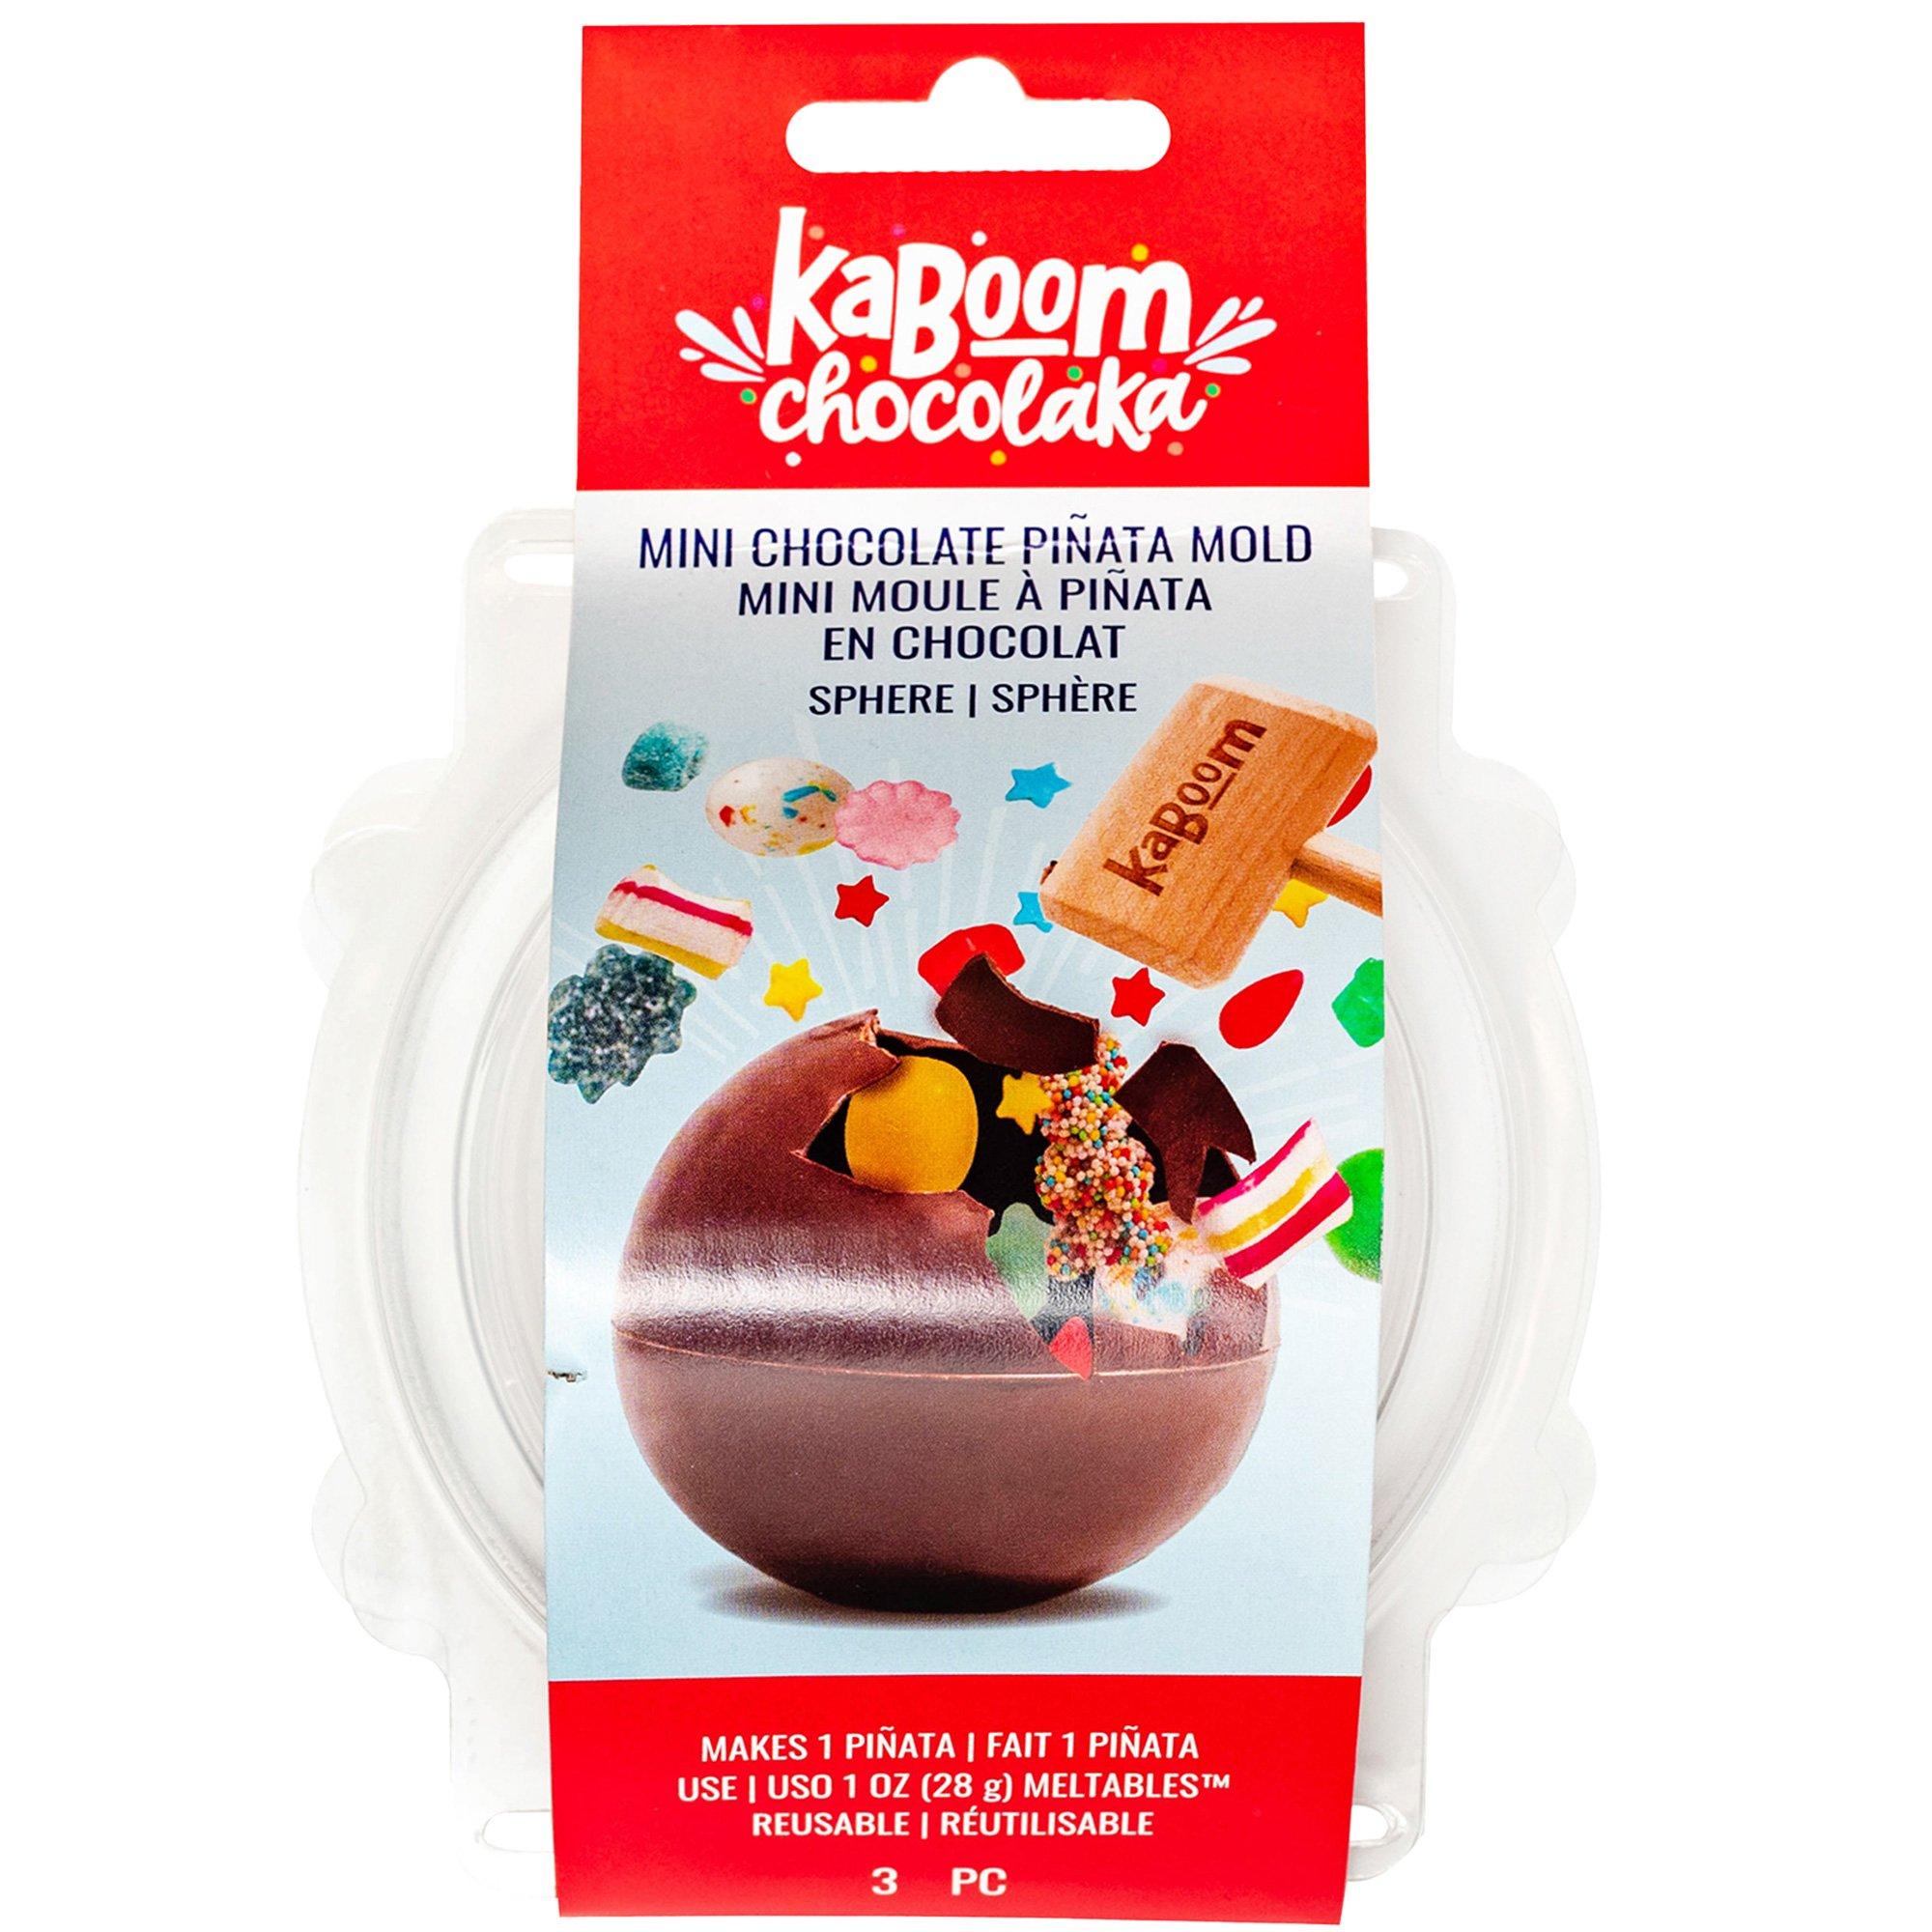 Sphere-Shaped Chocolate Piñata Mold, 4.4in - Kaboom Chocolaka